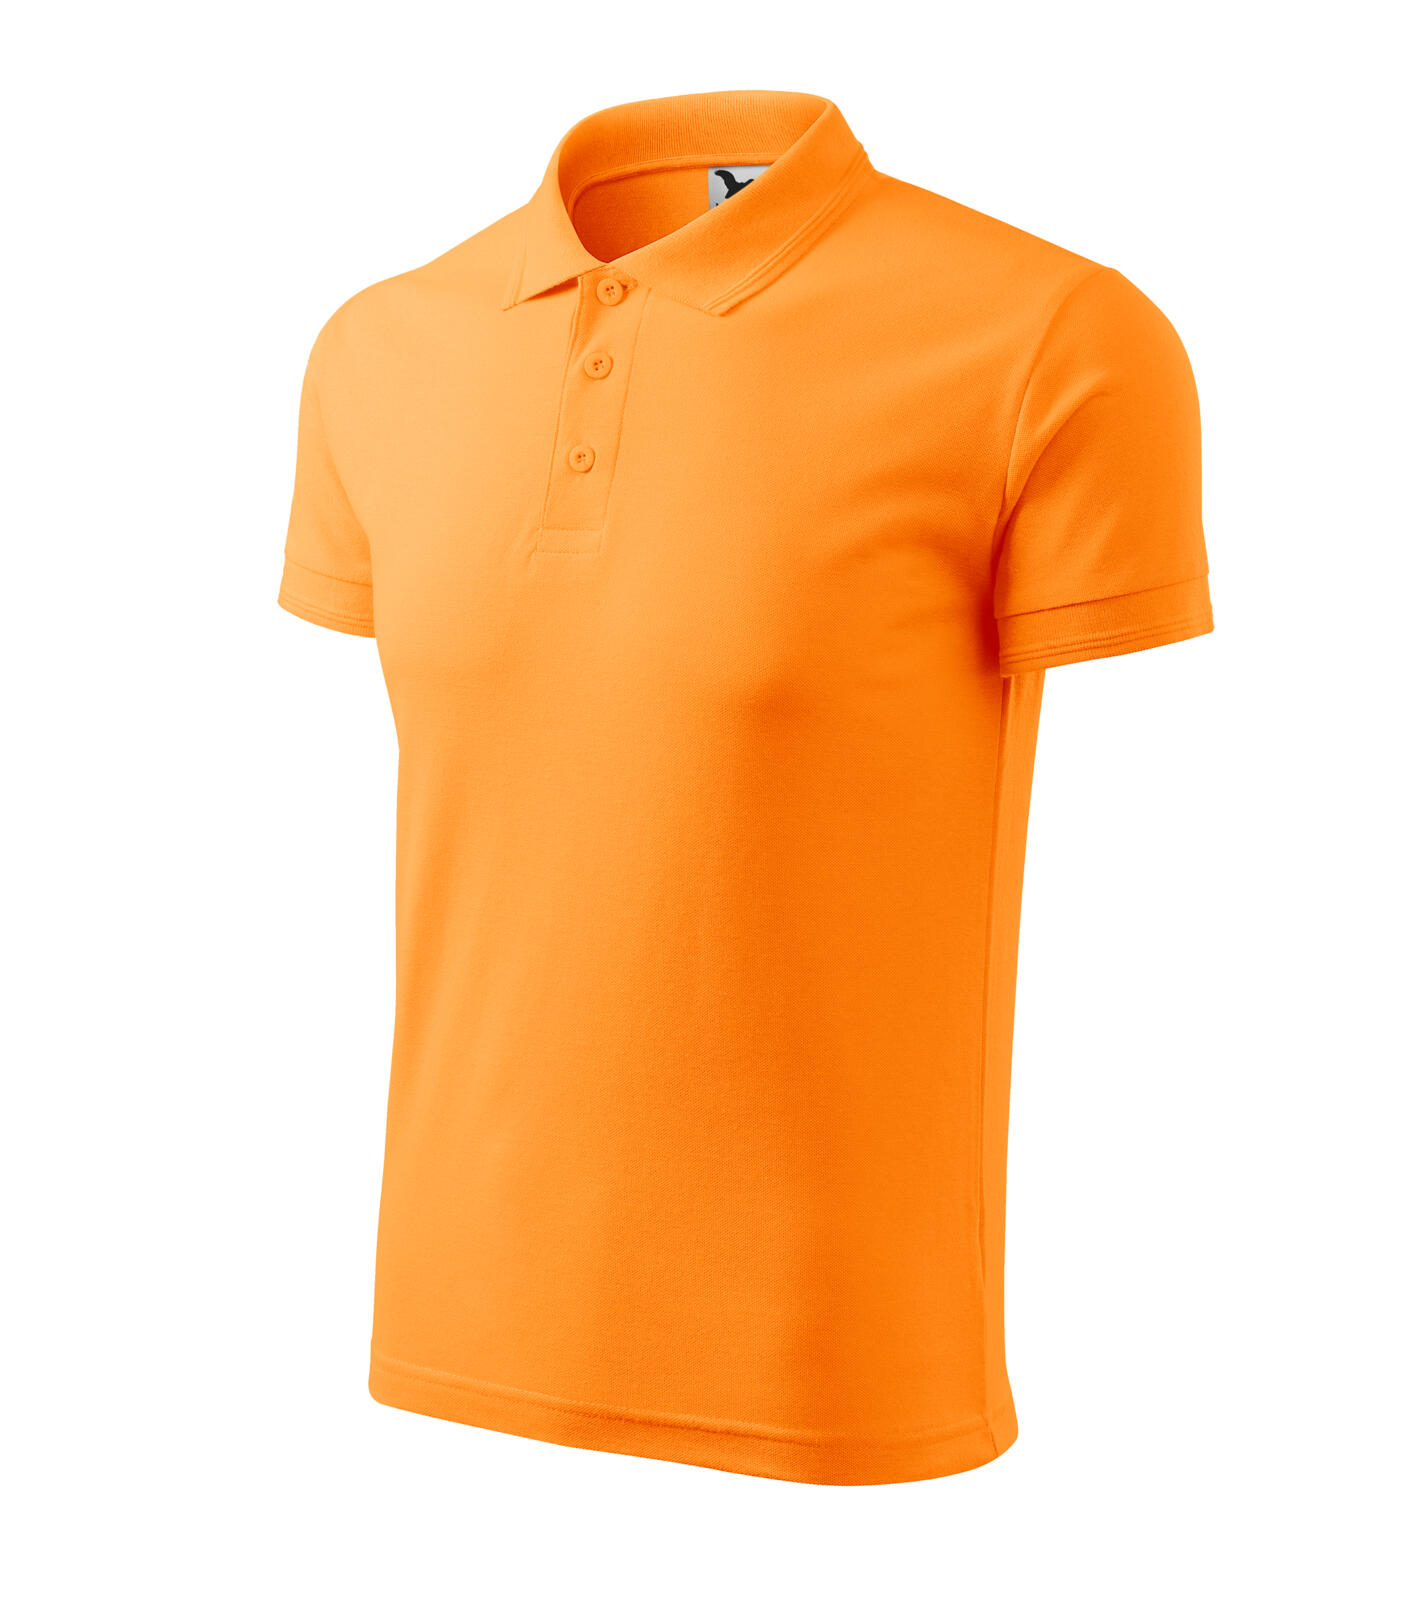 Pique Polo Polokošile pánská Barva: tangerine orange, Velikost: XL